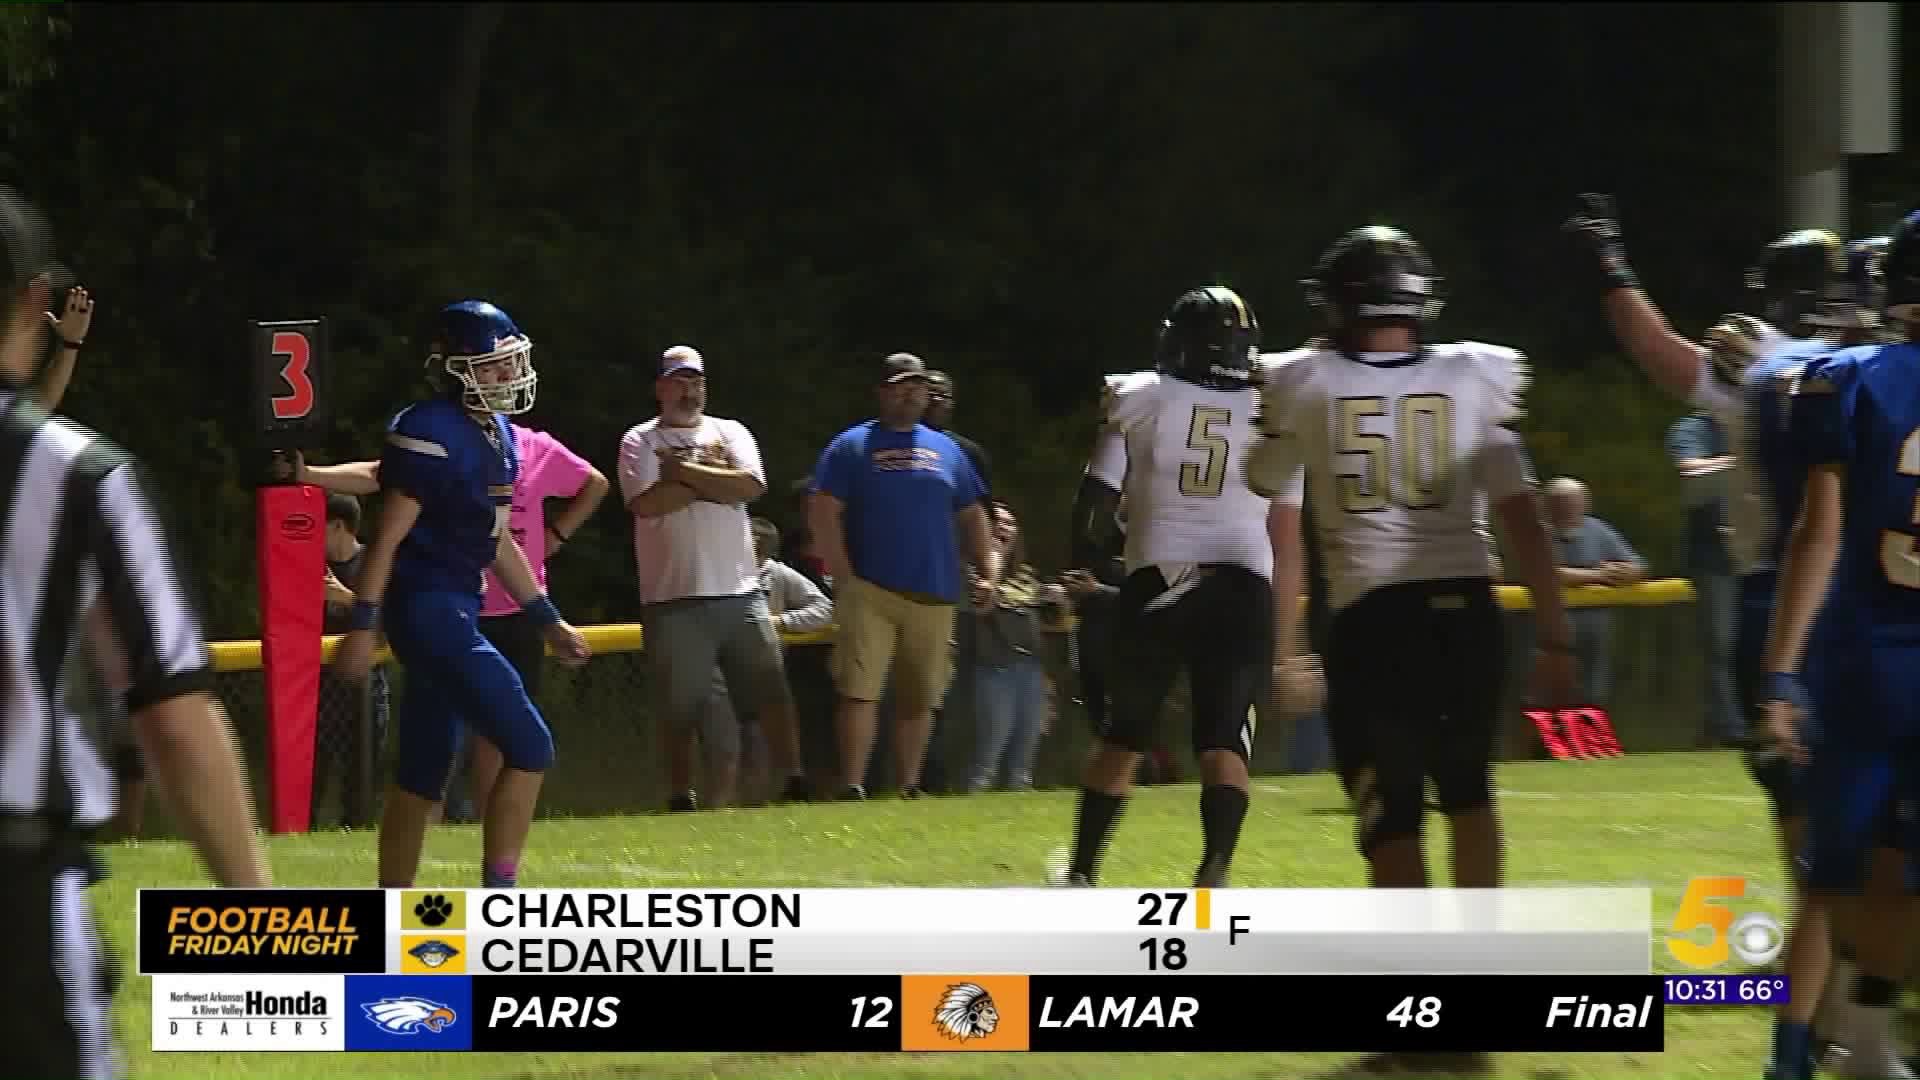 Charleston vs Cedarville